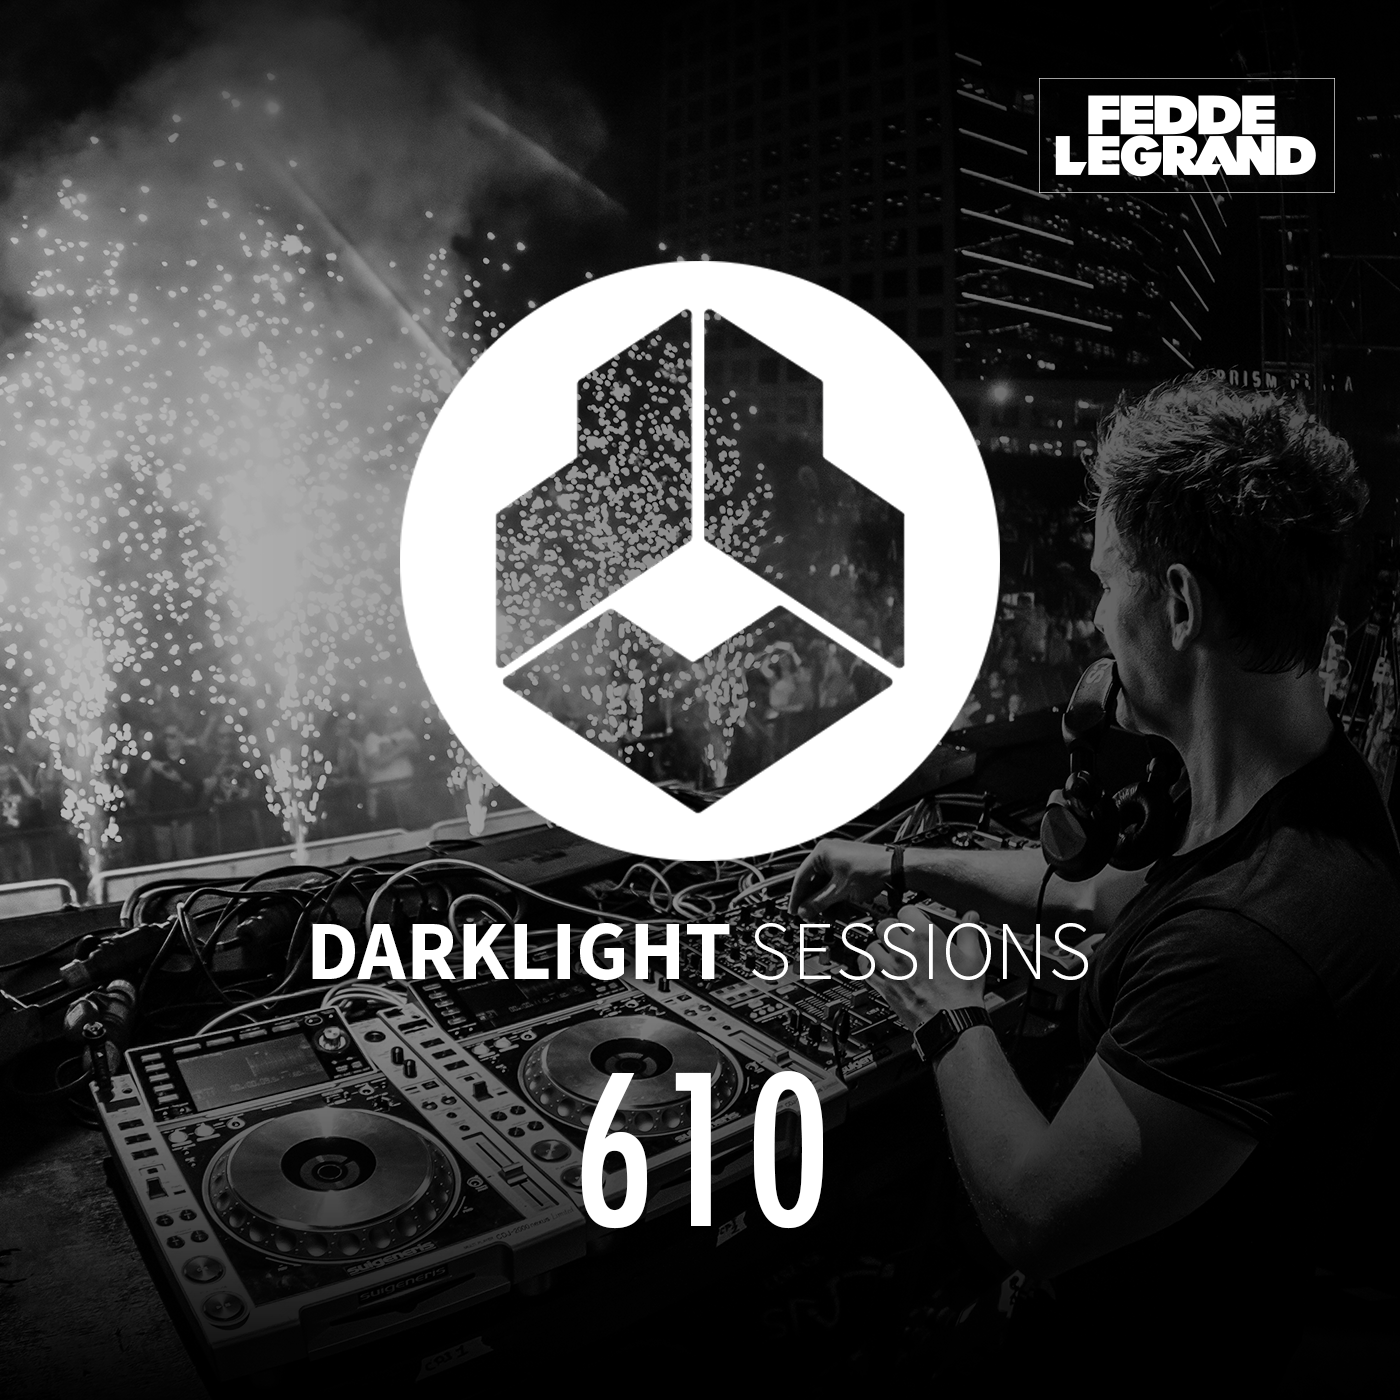 Darklight Sessions 610